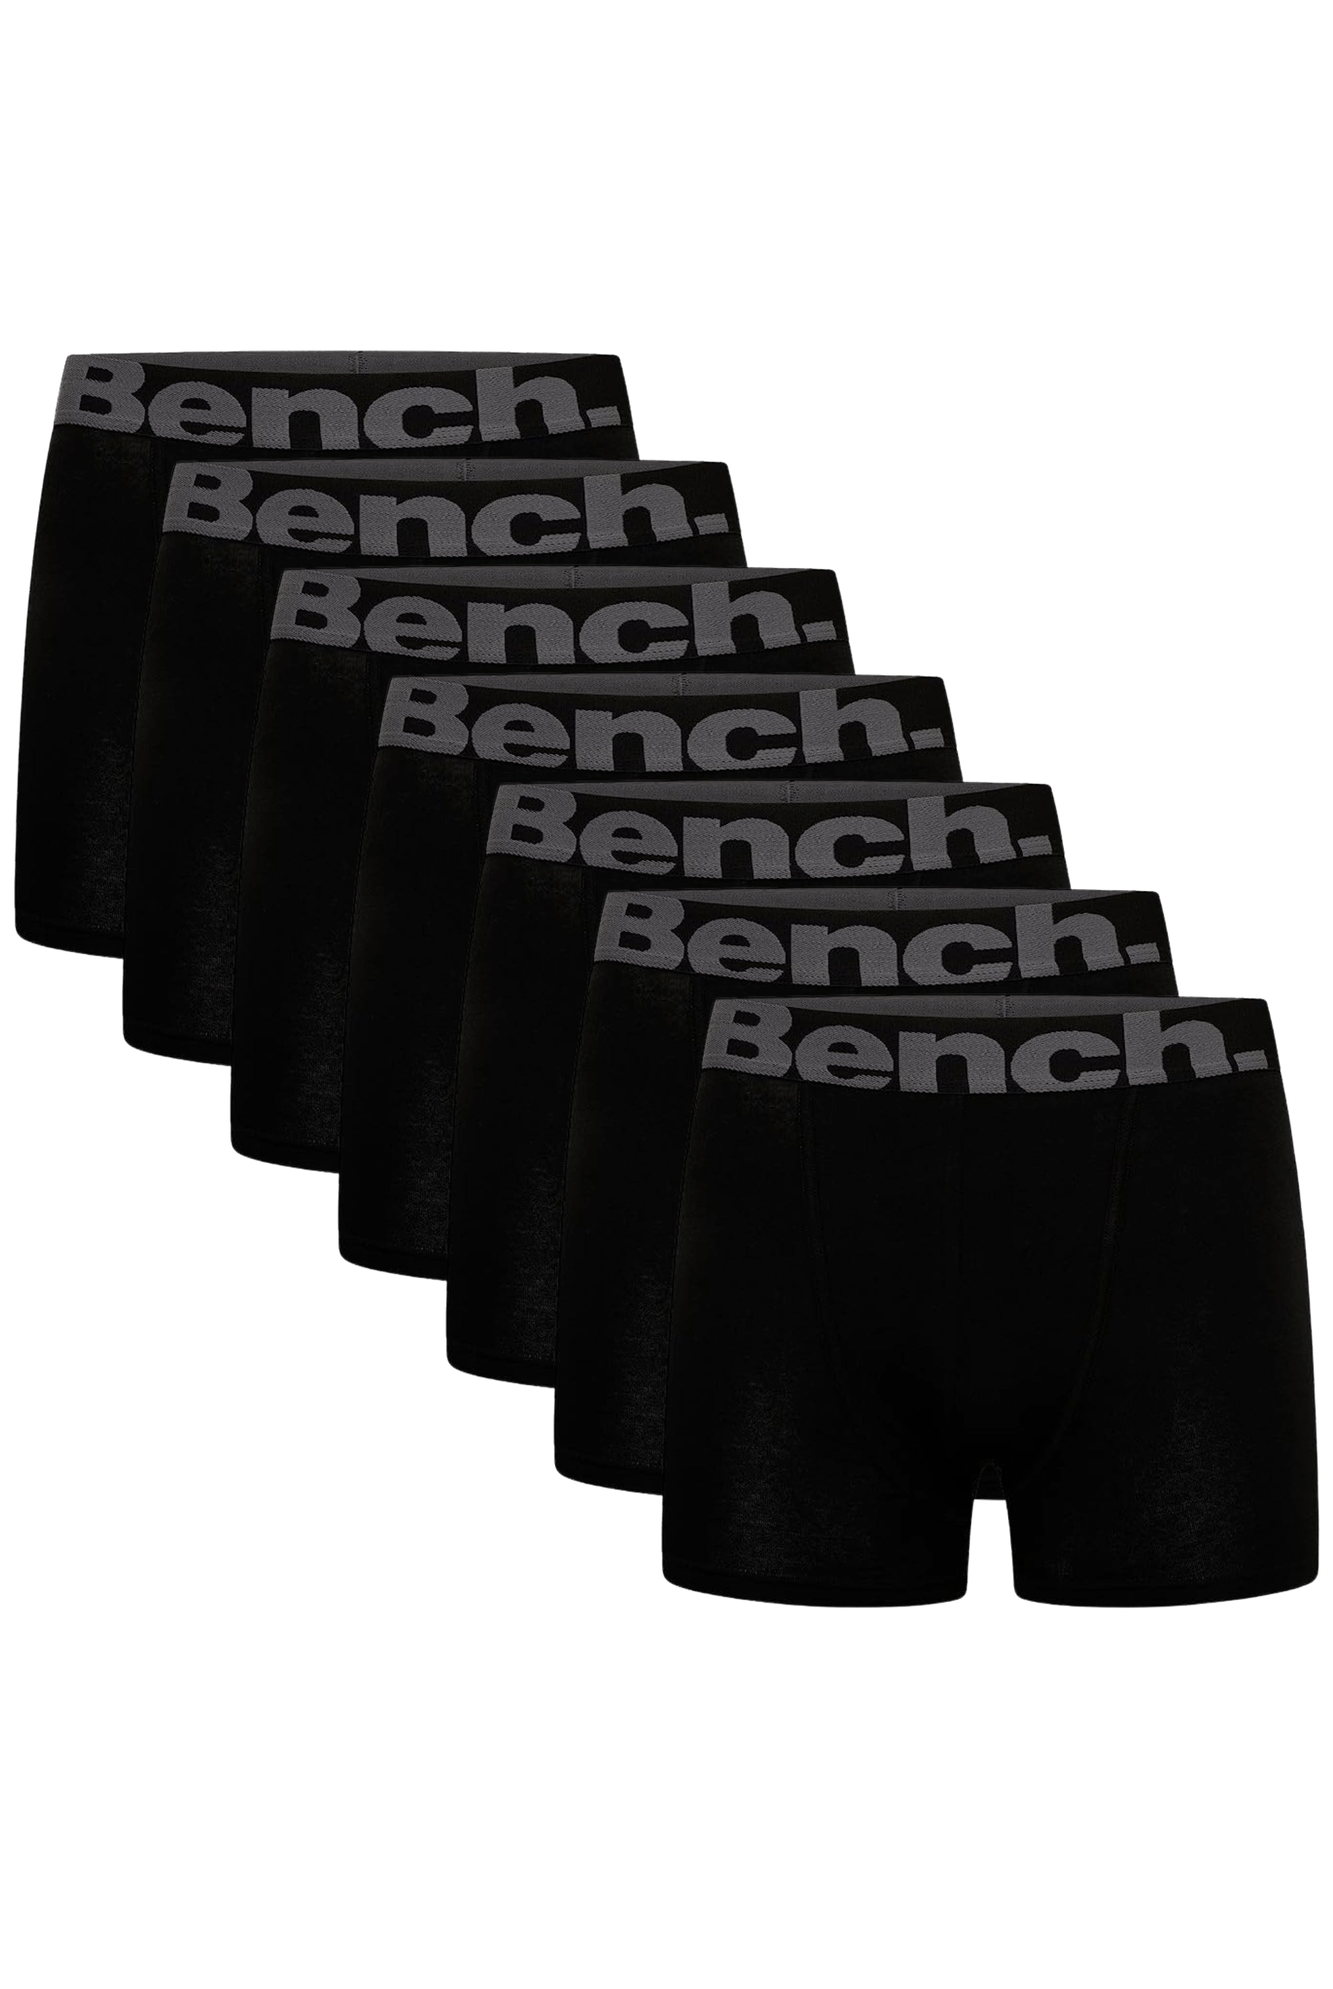 BENCH MEN'S BOXER BRIEFS ( PACK OF 3)